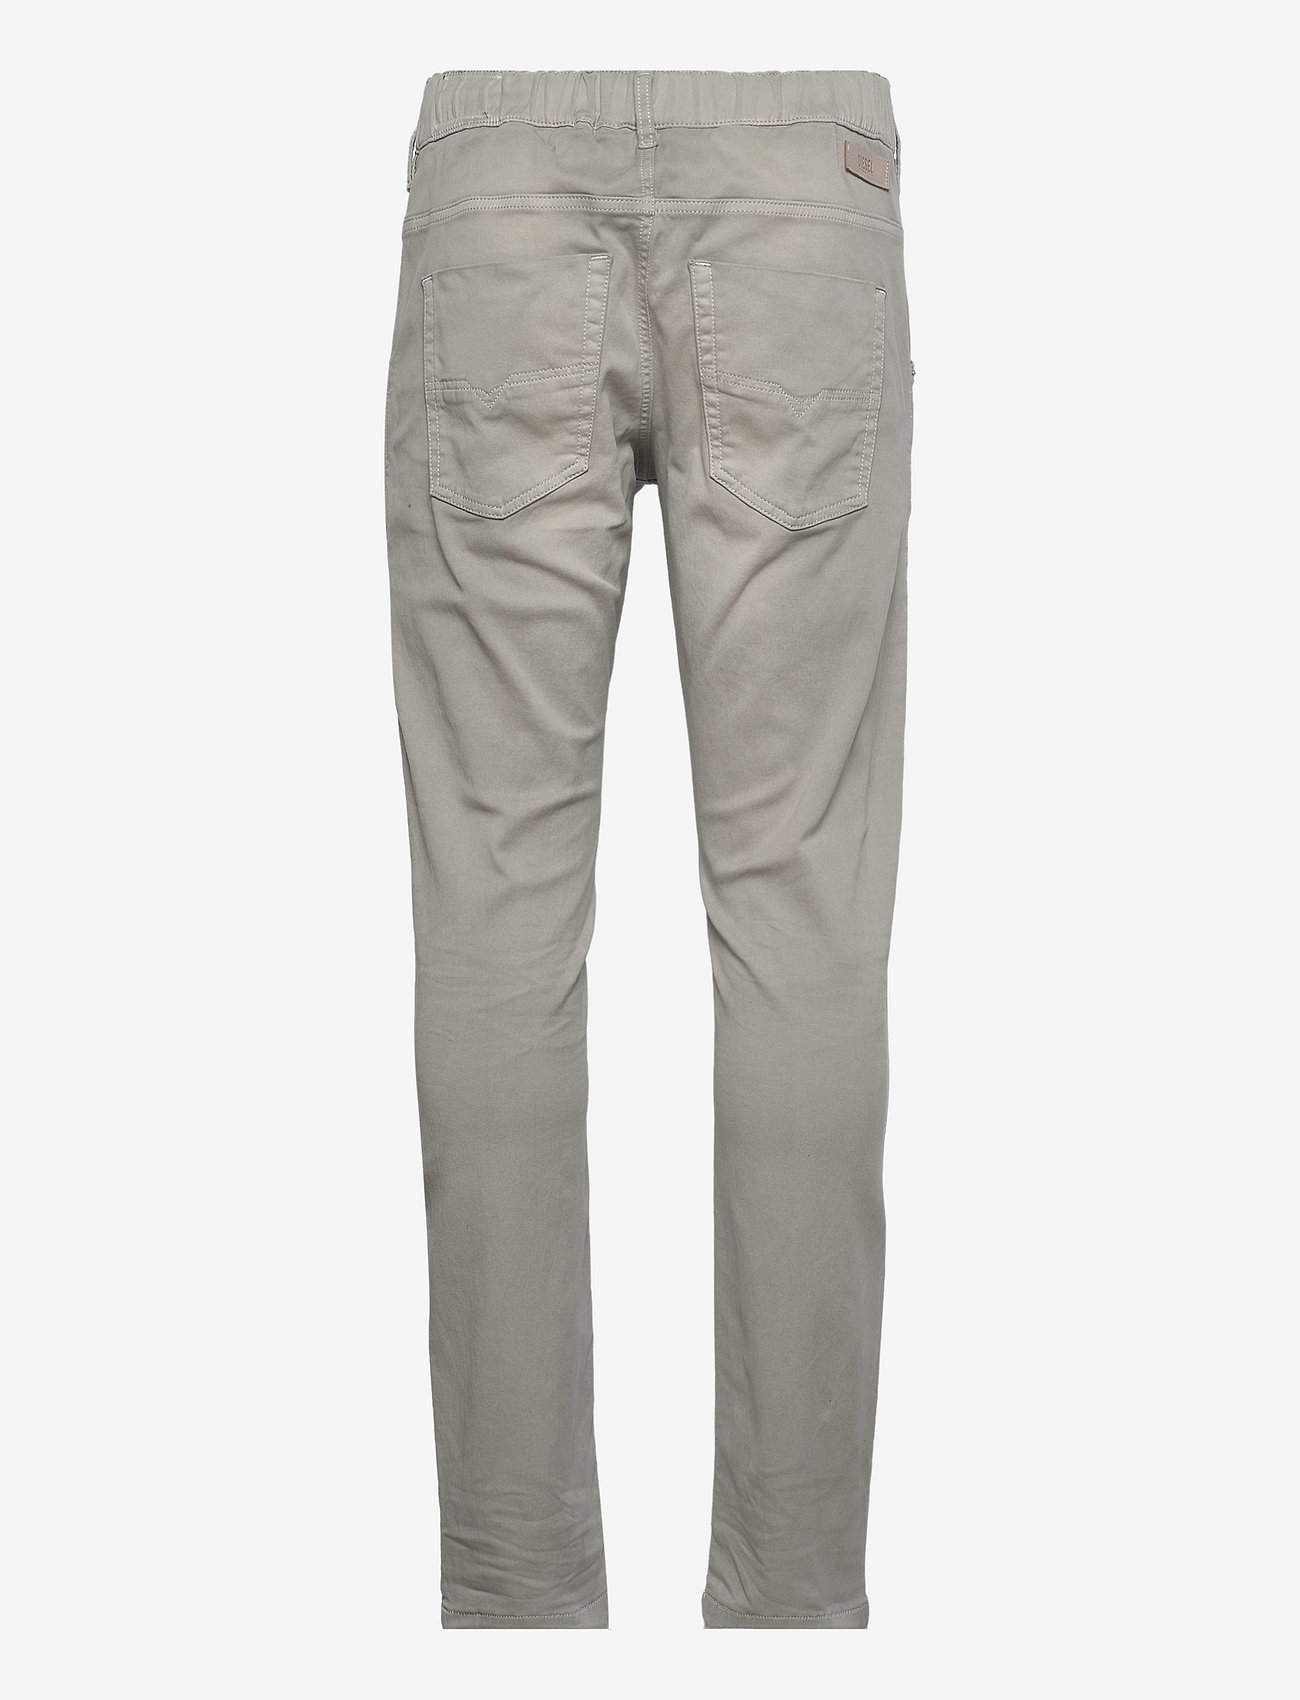 Diesel - KROOLEY-E-NE L.32 Sweat jeans - chino stila bikses - medium/grey - 1